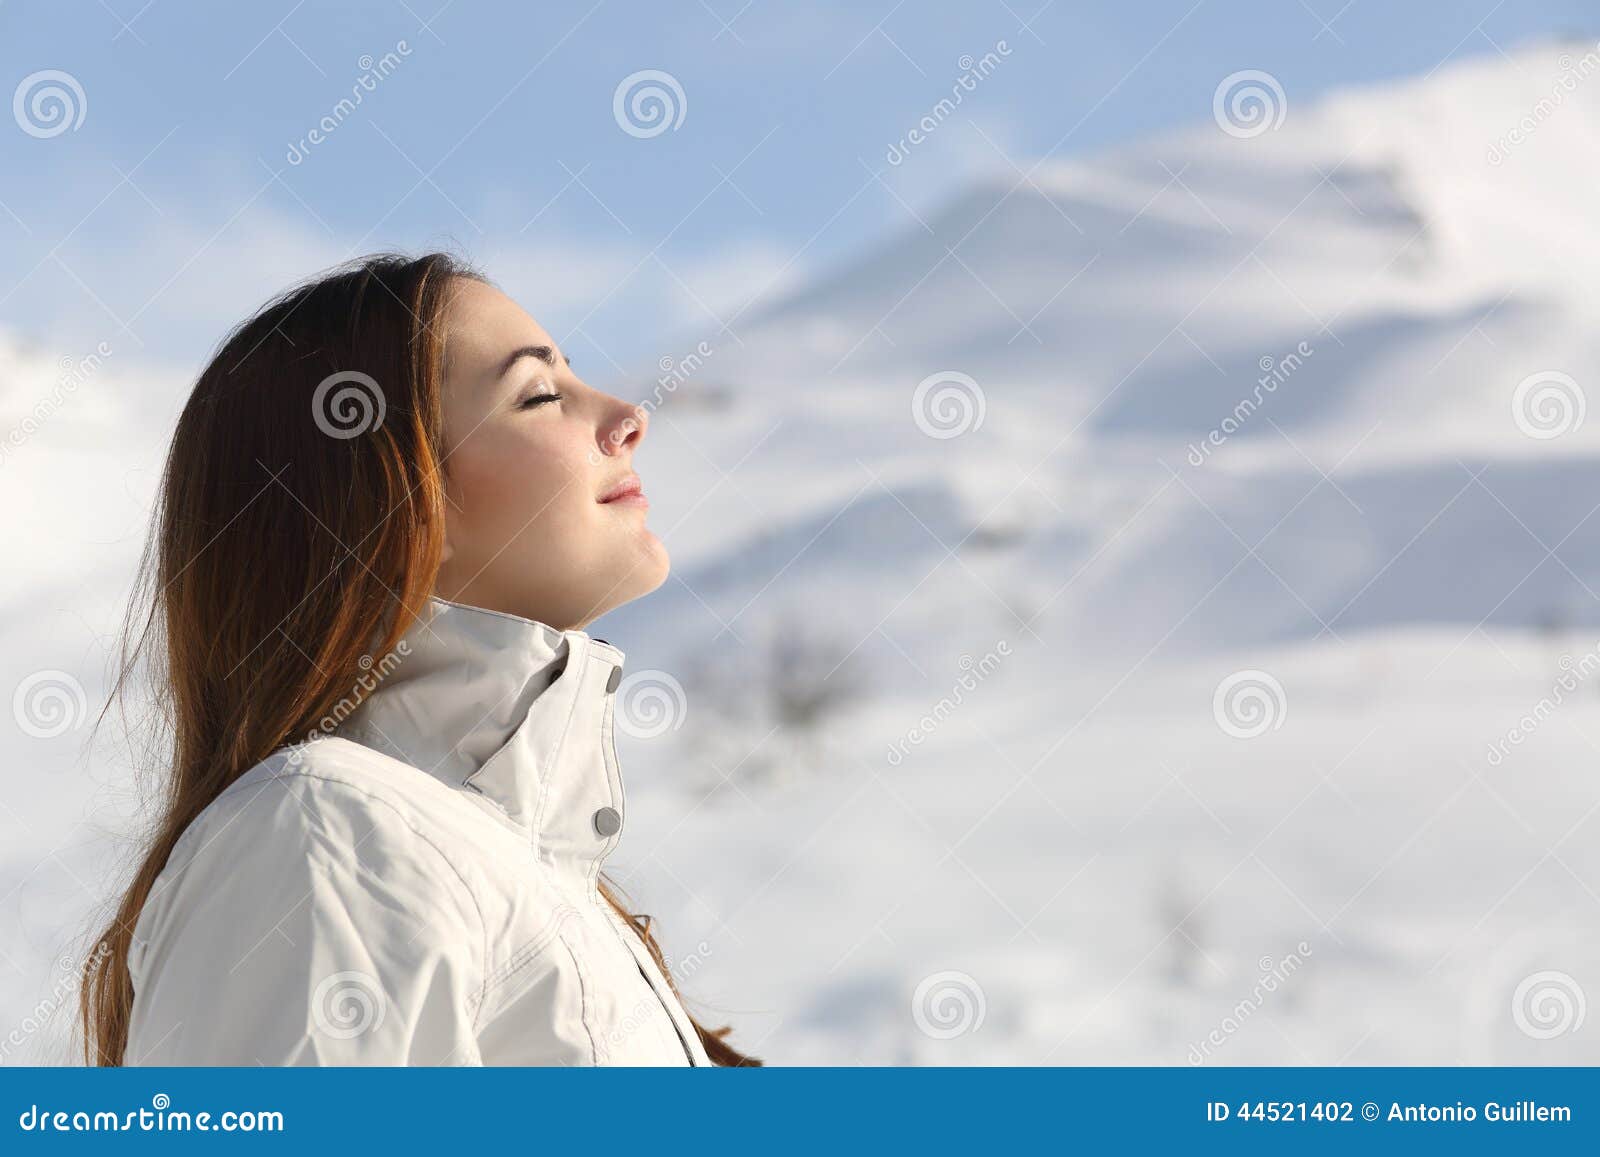 explorer woman breathing fresh air in winter in a snowy mountain